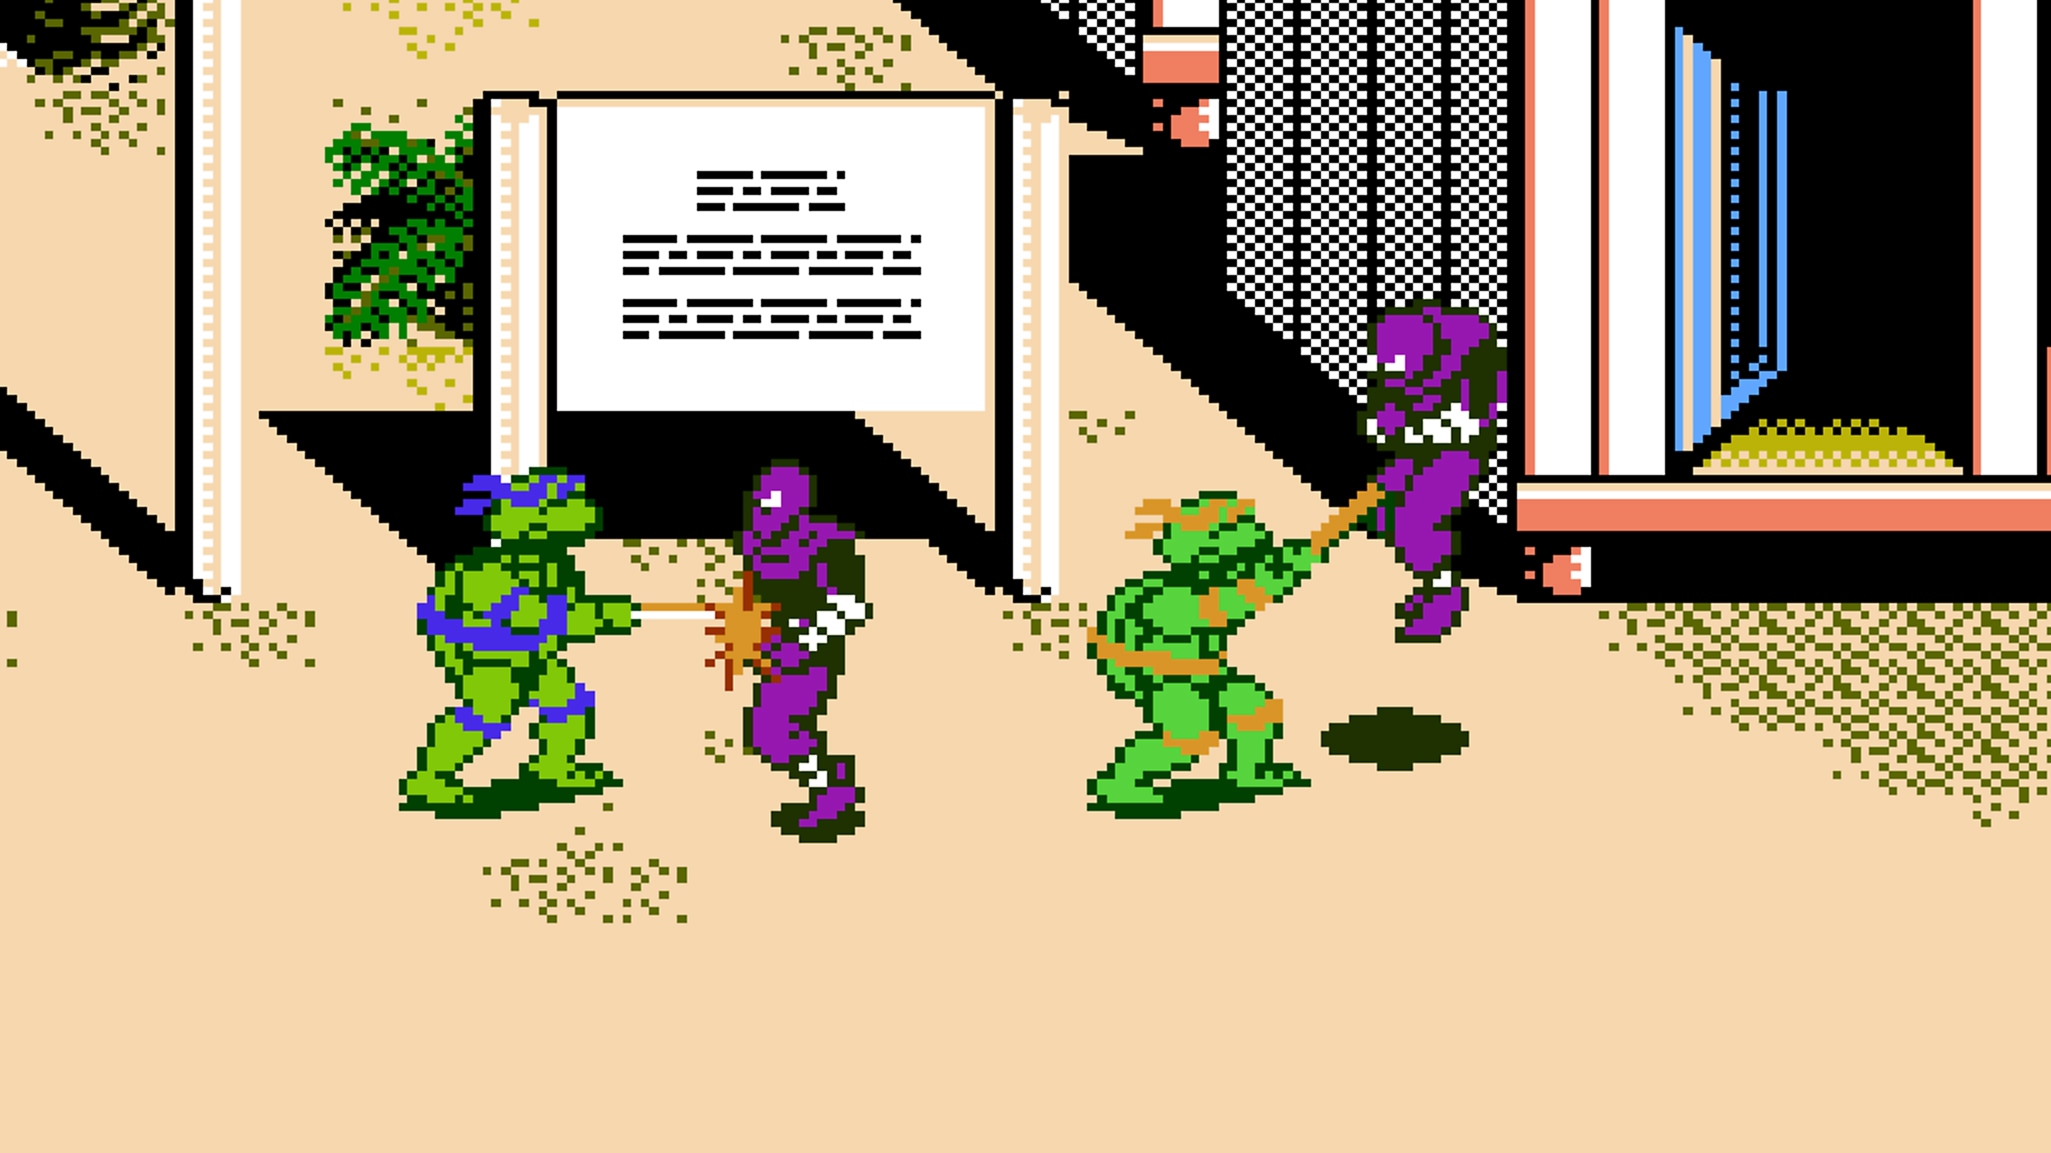 Kolekce Teenage Mutant Ninja Turtles – screenshot ze hry Tournament Fighters, kde bojuje Rafael s Trhačem